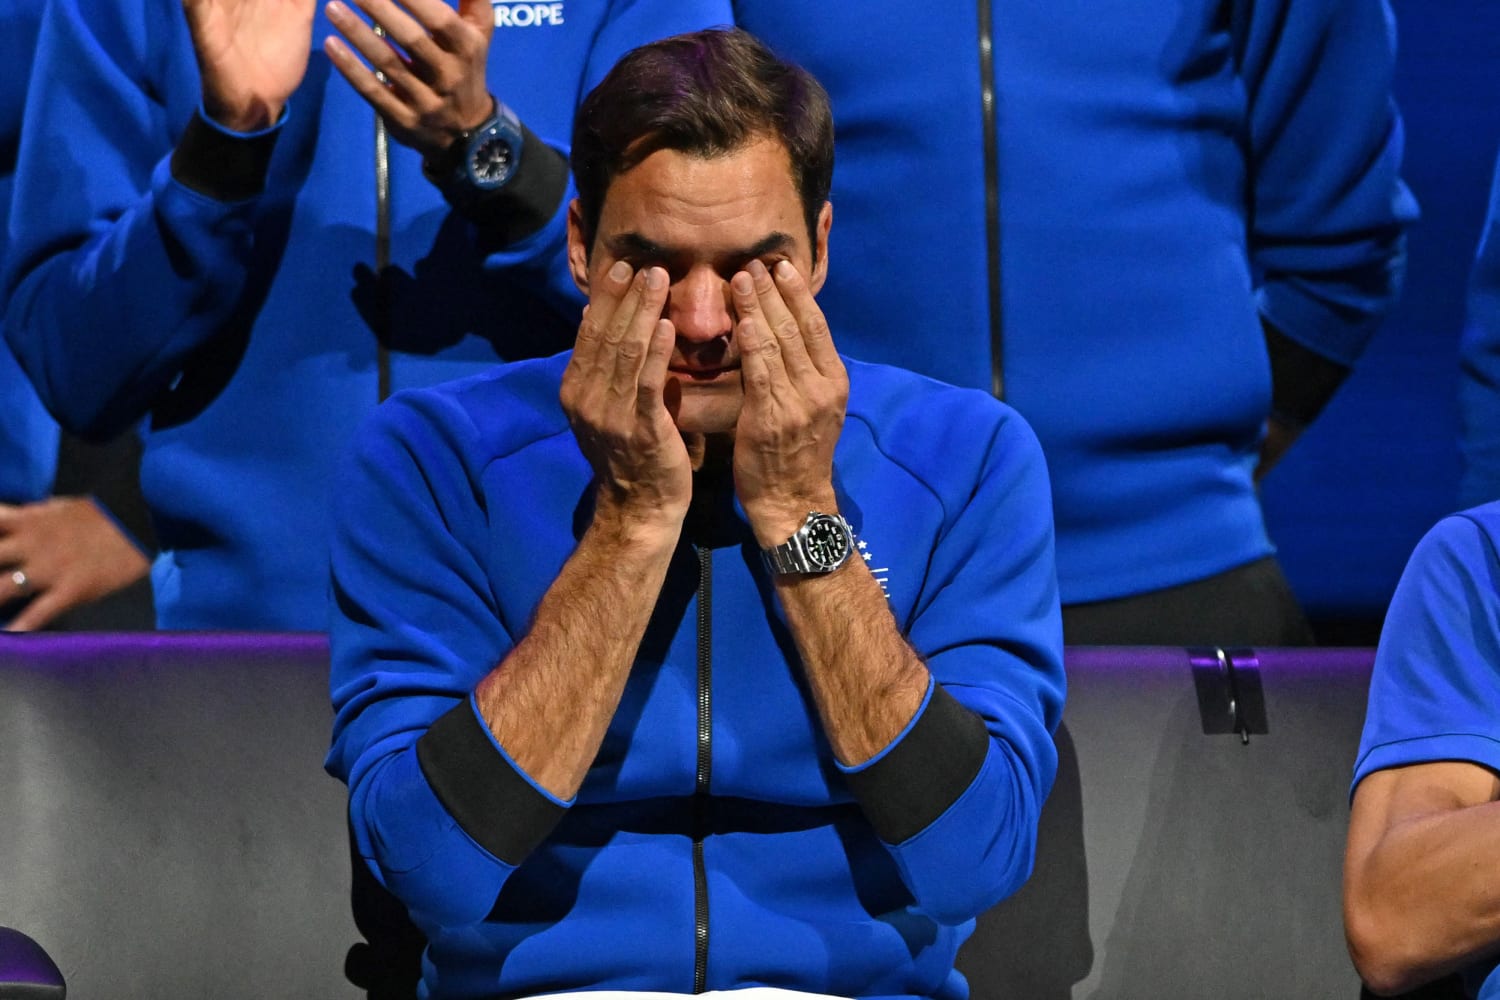 Roger Federer tears up after his final pro tennis match